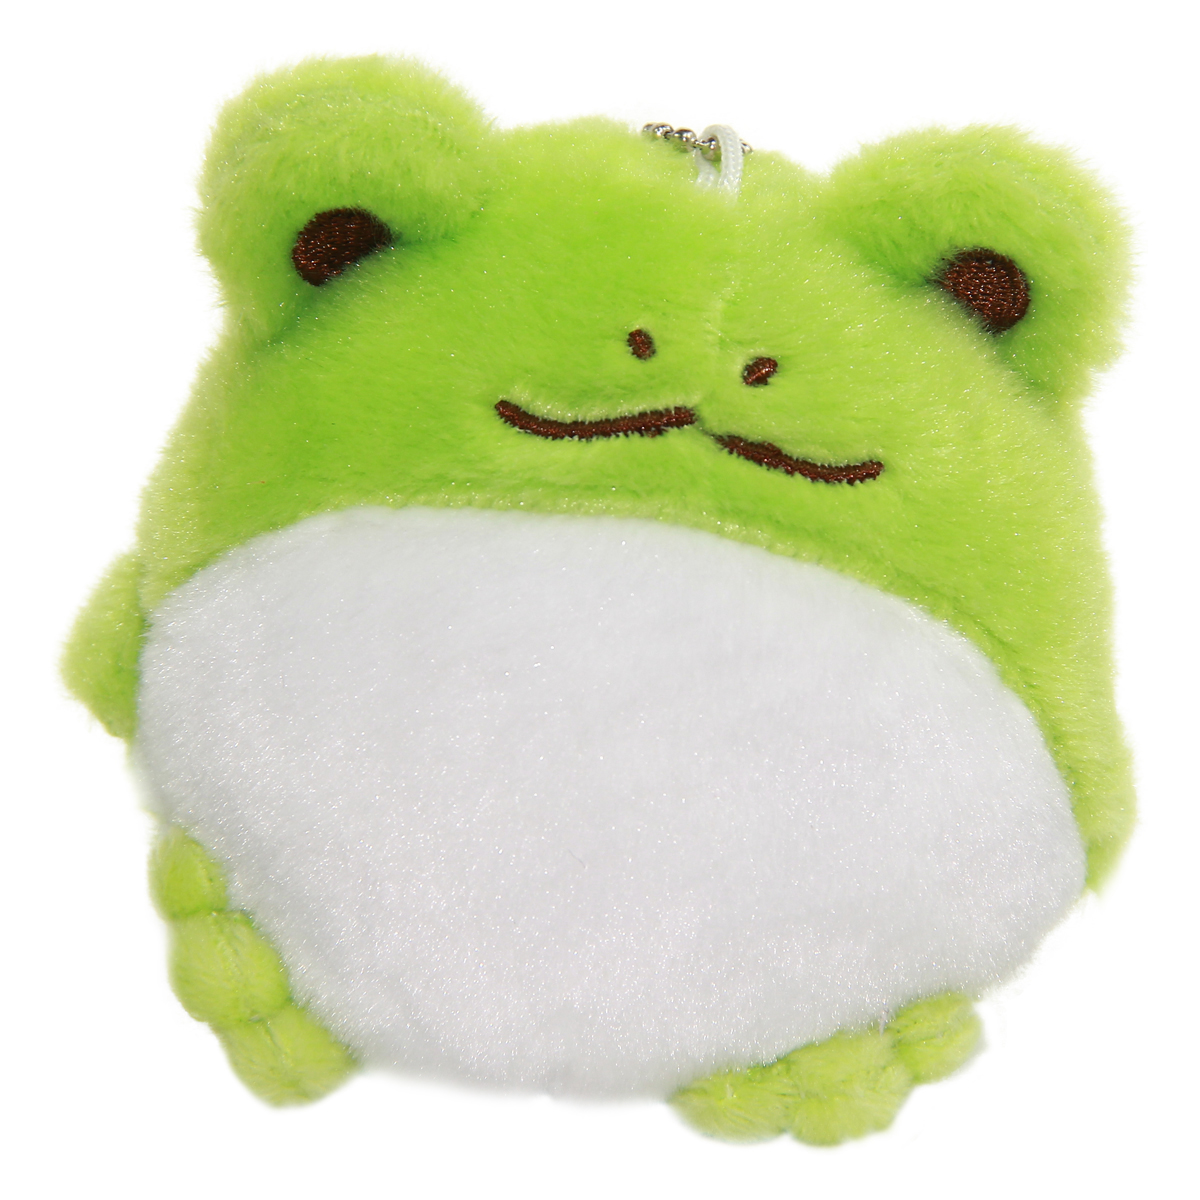 https://www.cyrenanime.com/storage/product-photos/22/frog-plush-doll-kawaii-stuffed-animal-soft-fuzzy-squishy-plushie-mochi-green.jpg